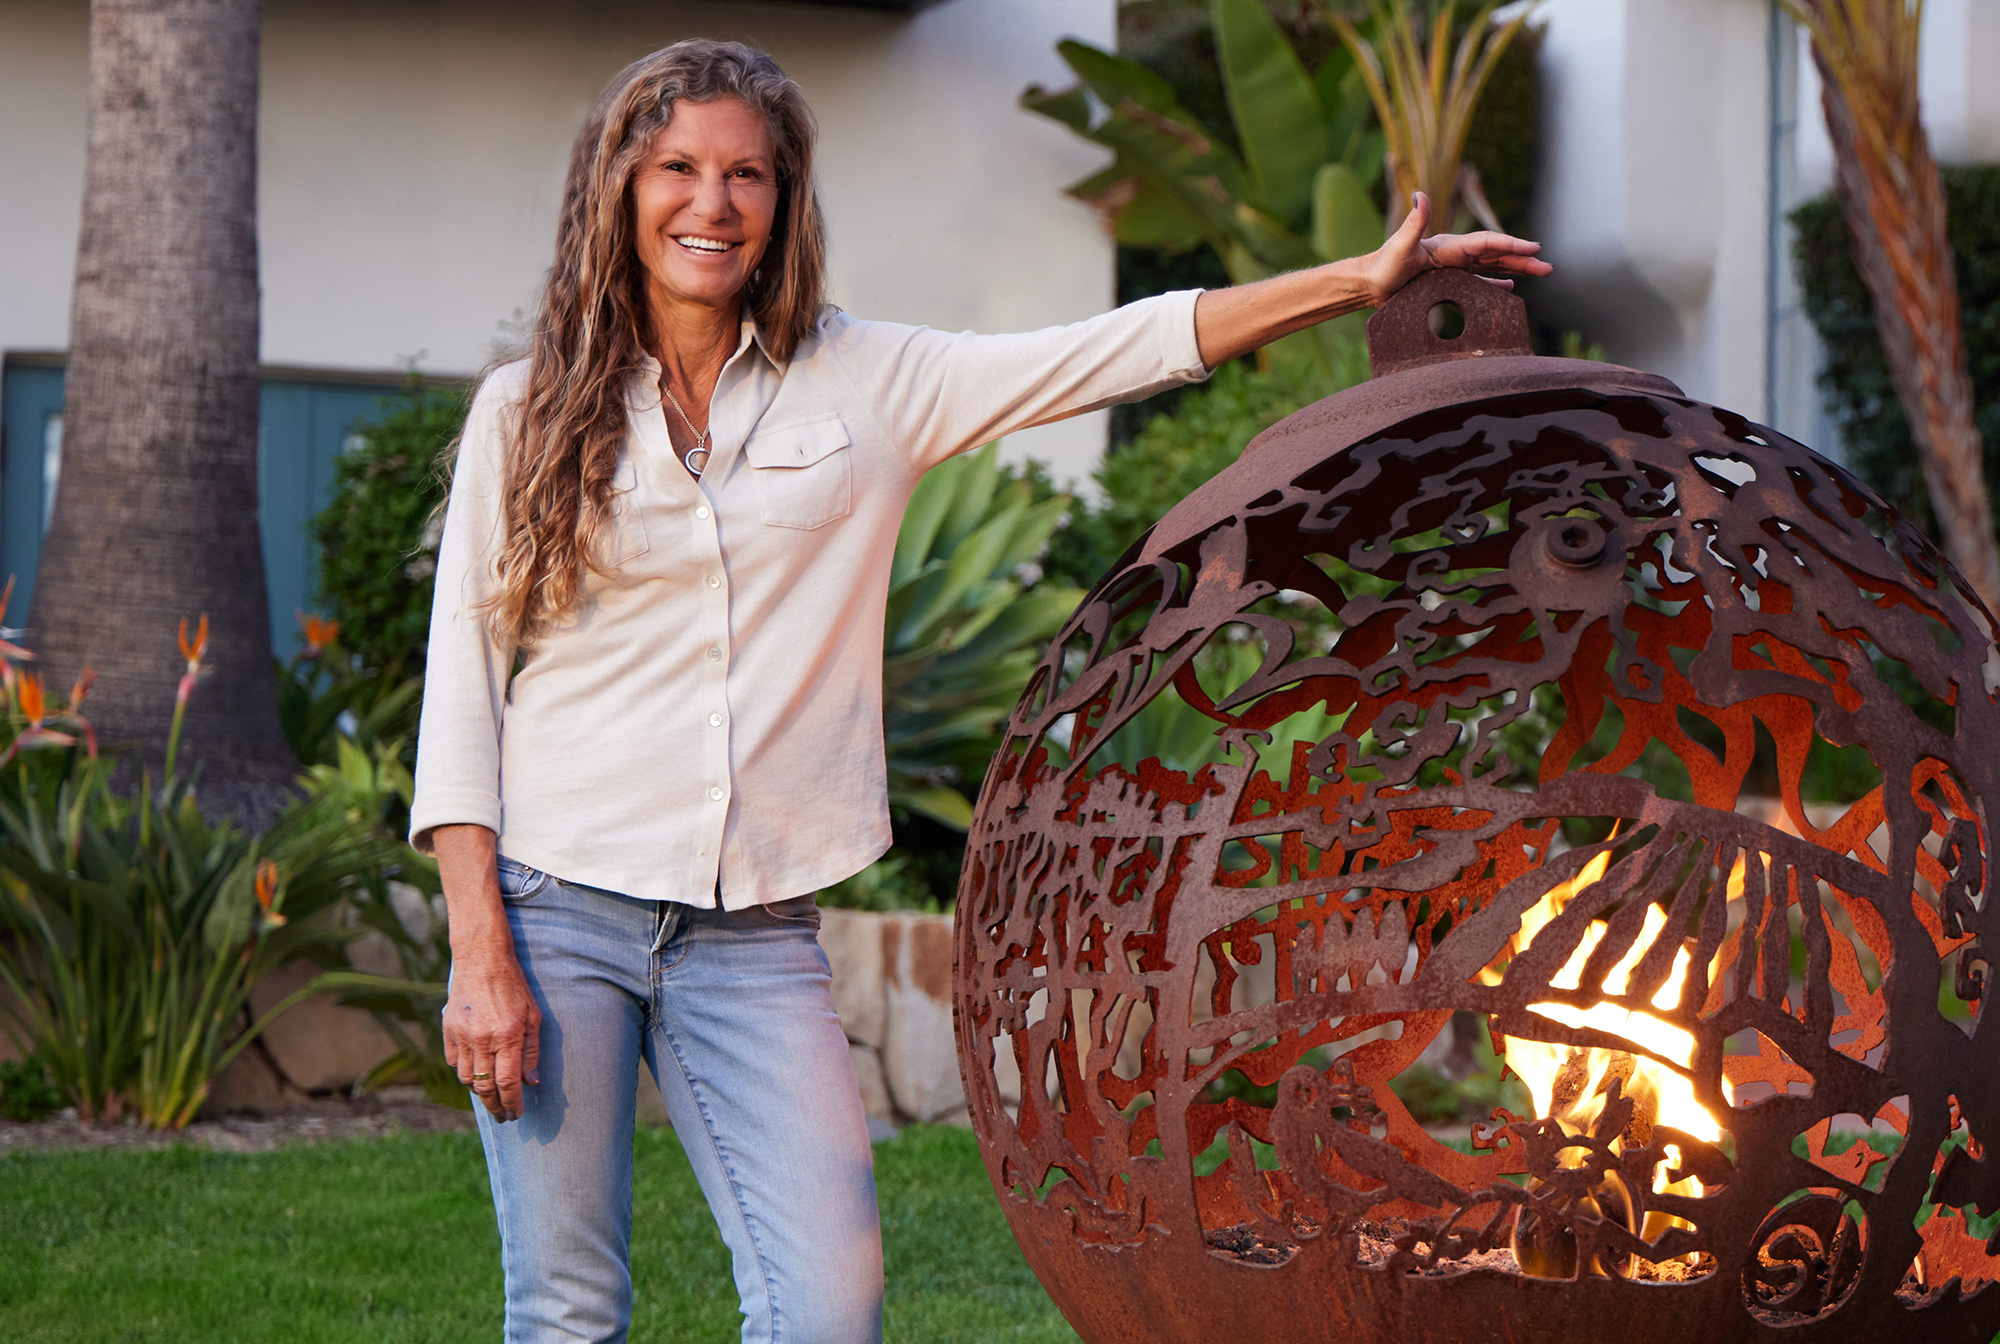 Sandra Vlock Architect with her Fireballs